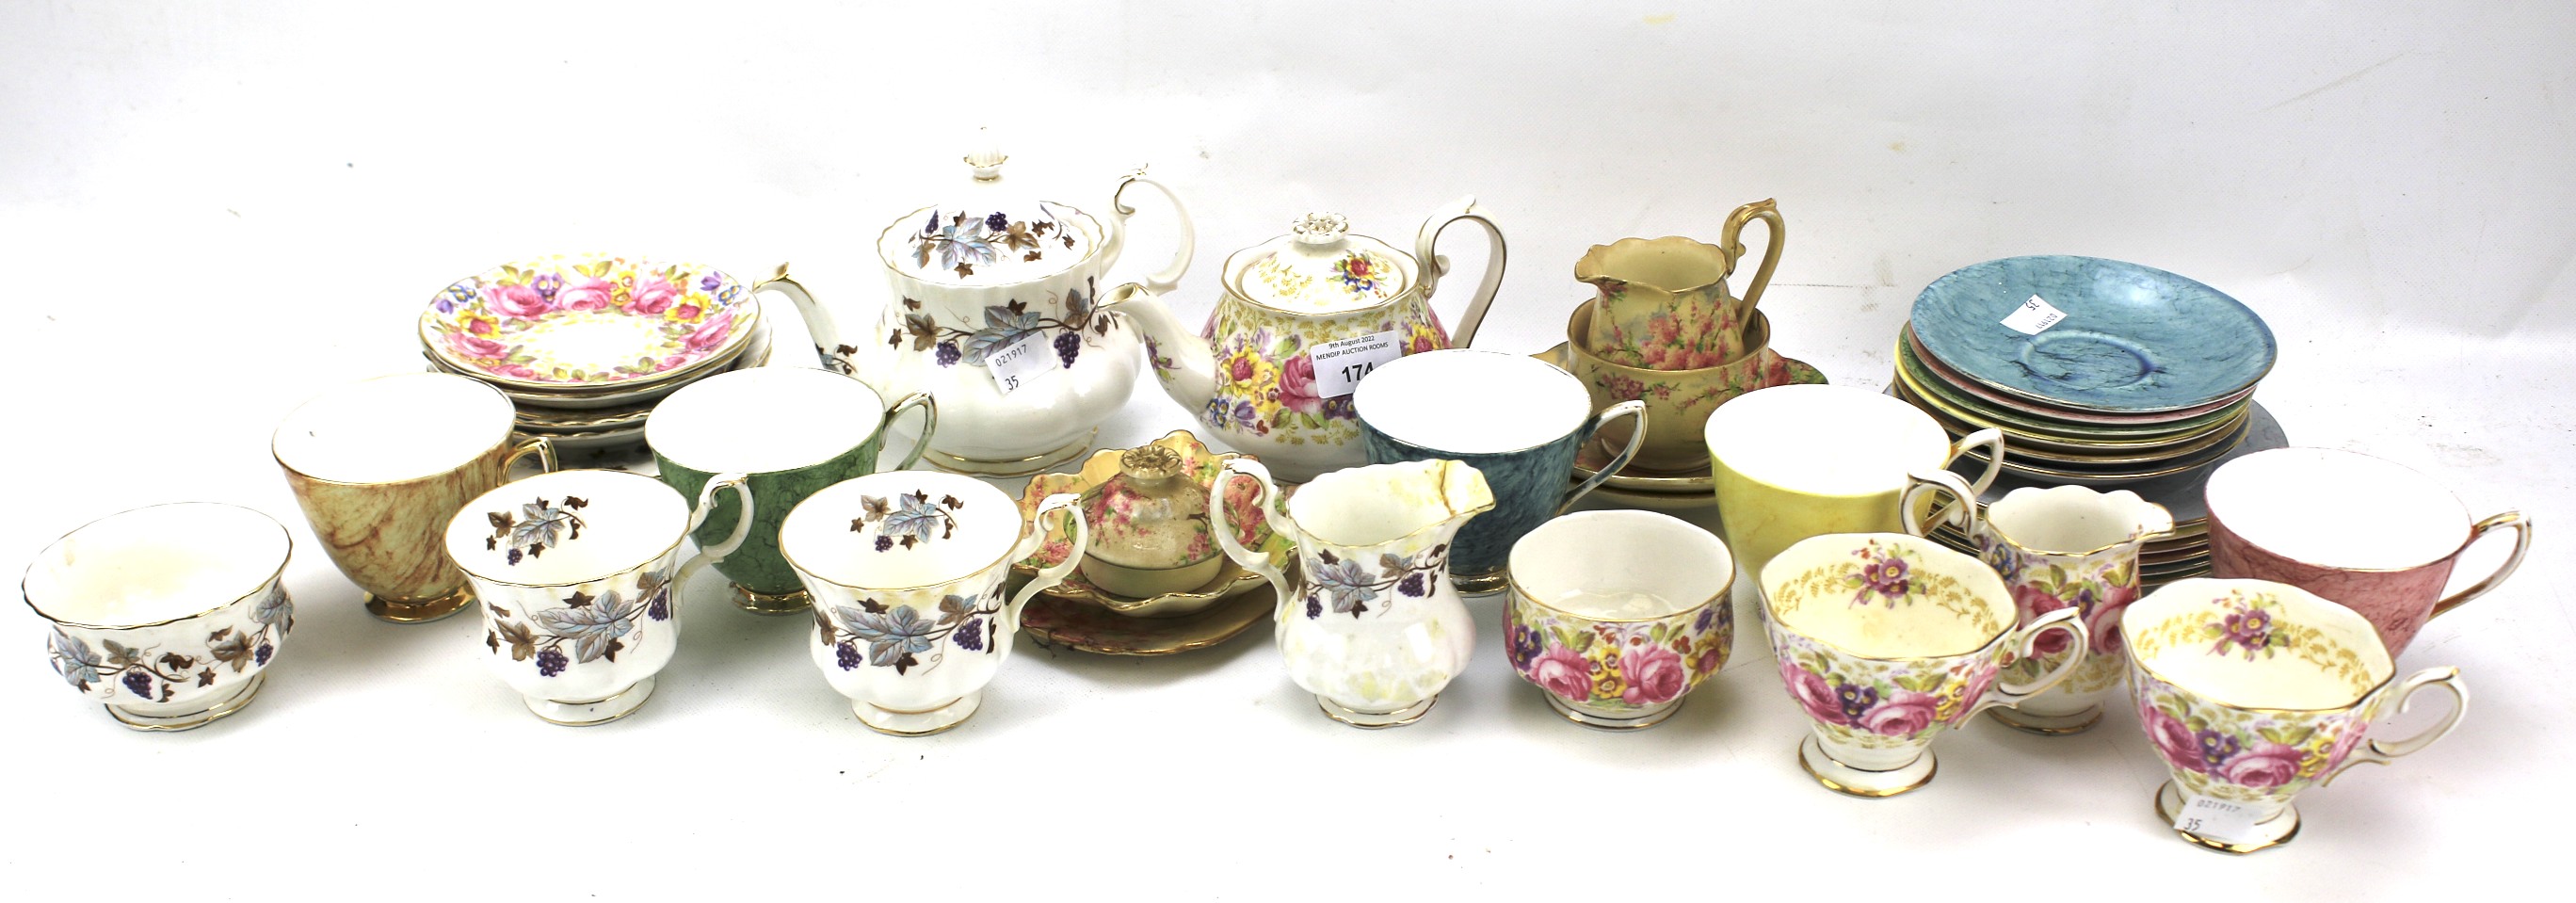 An assortment of Royal Albert ceramics.